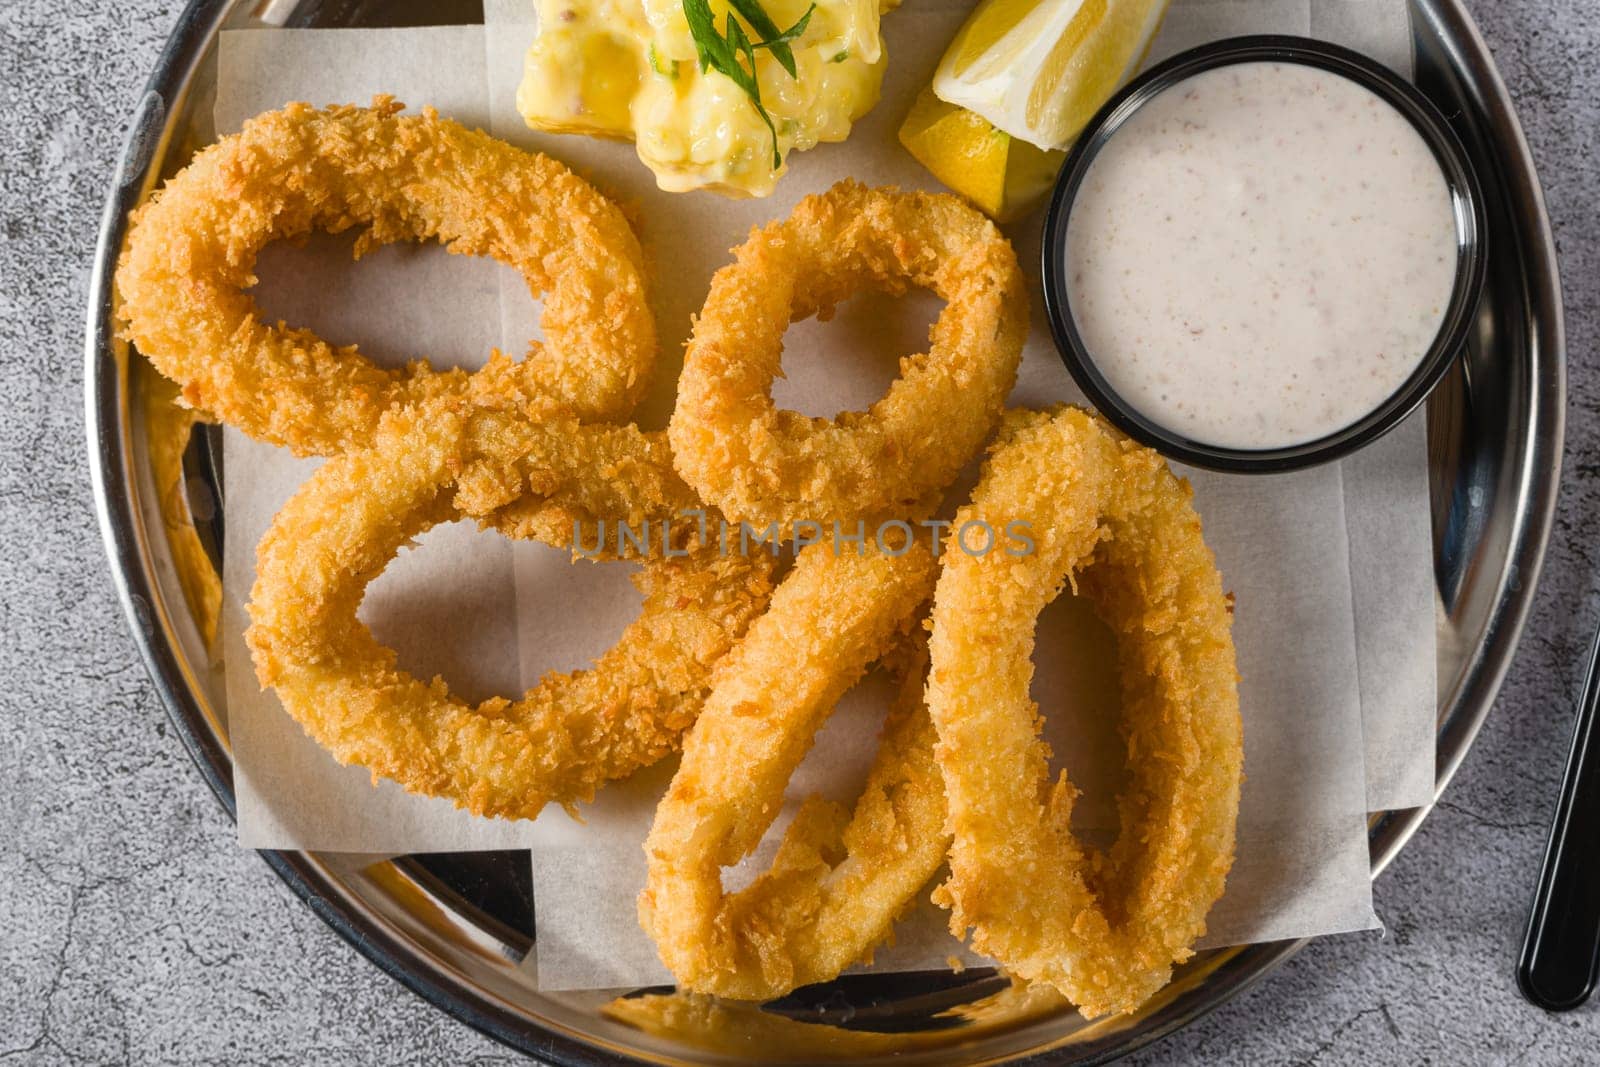 Fried calamari with potato salad next to it on stone table